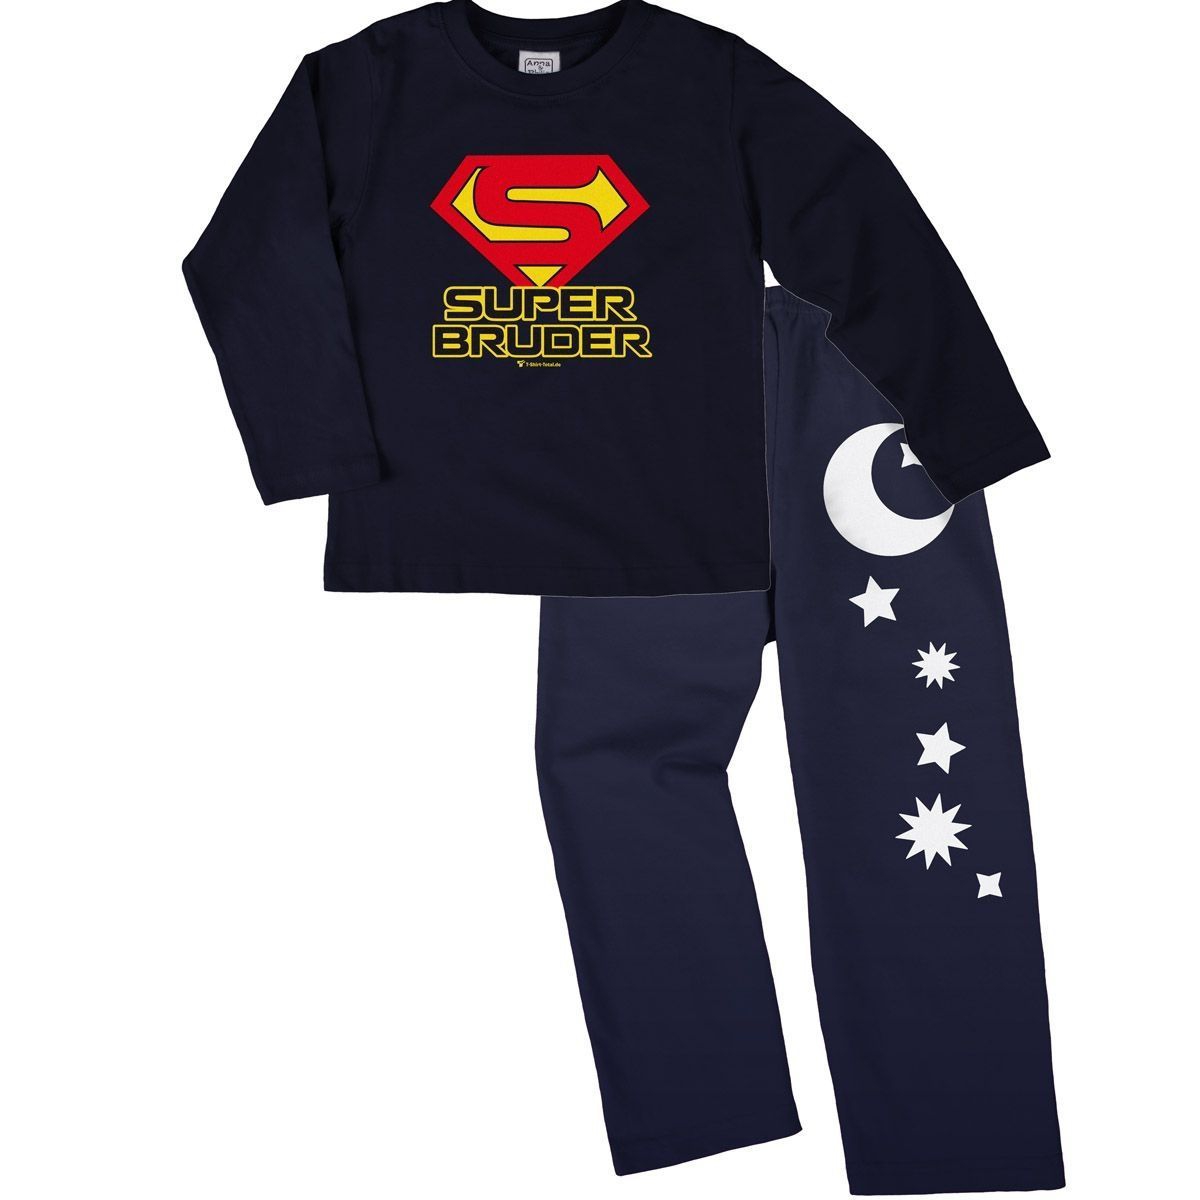 Super Bruder Pyjama Set navy / navy 134 / 140